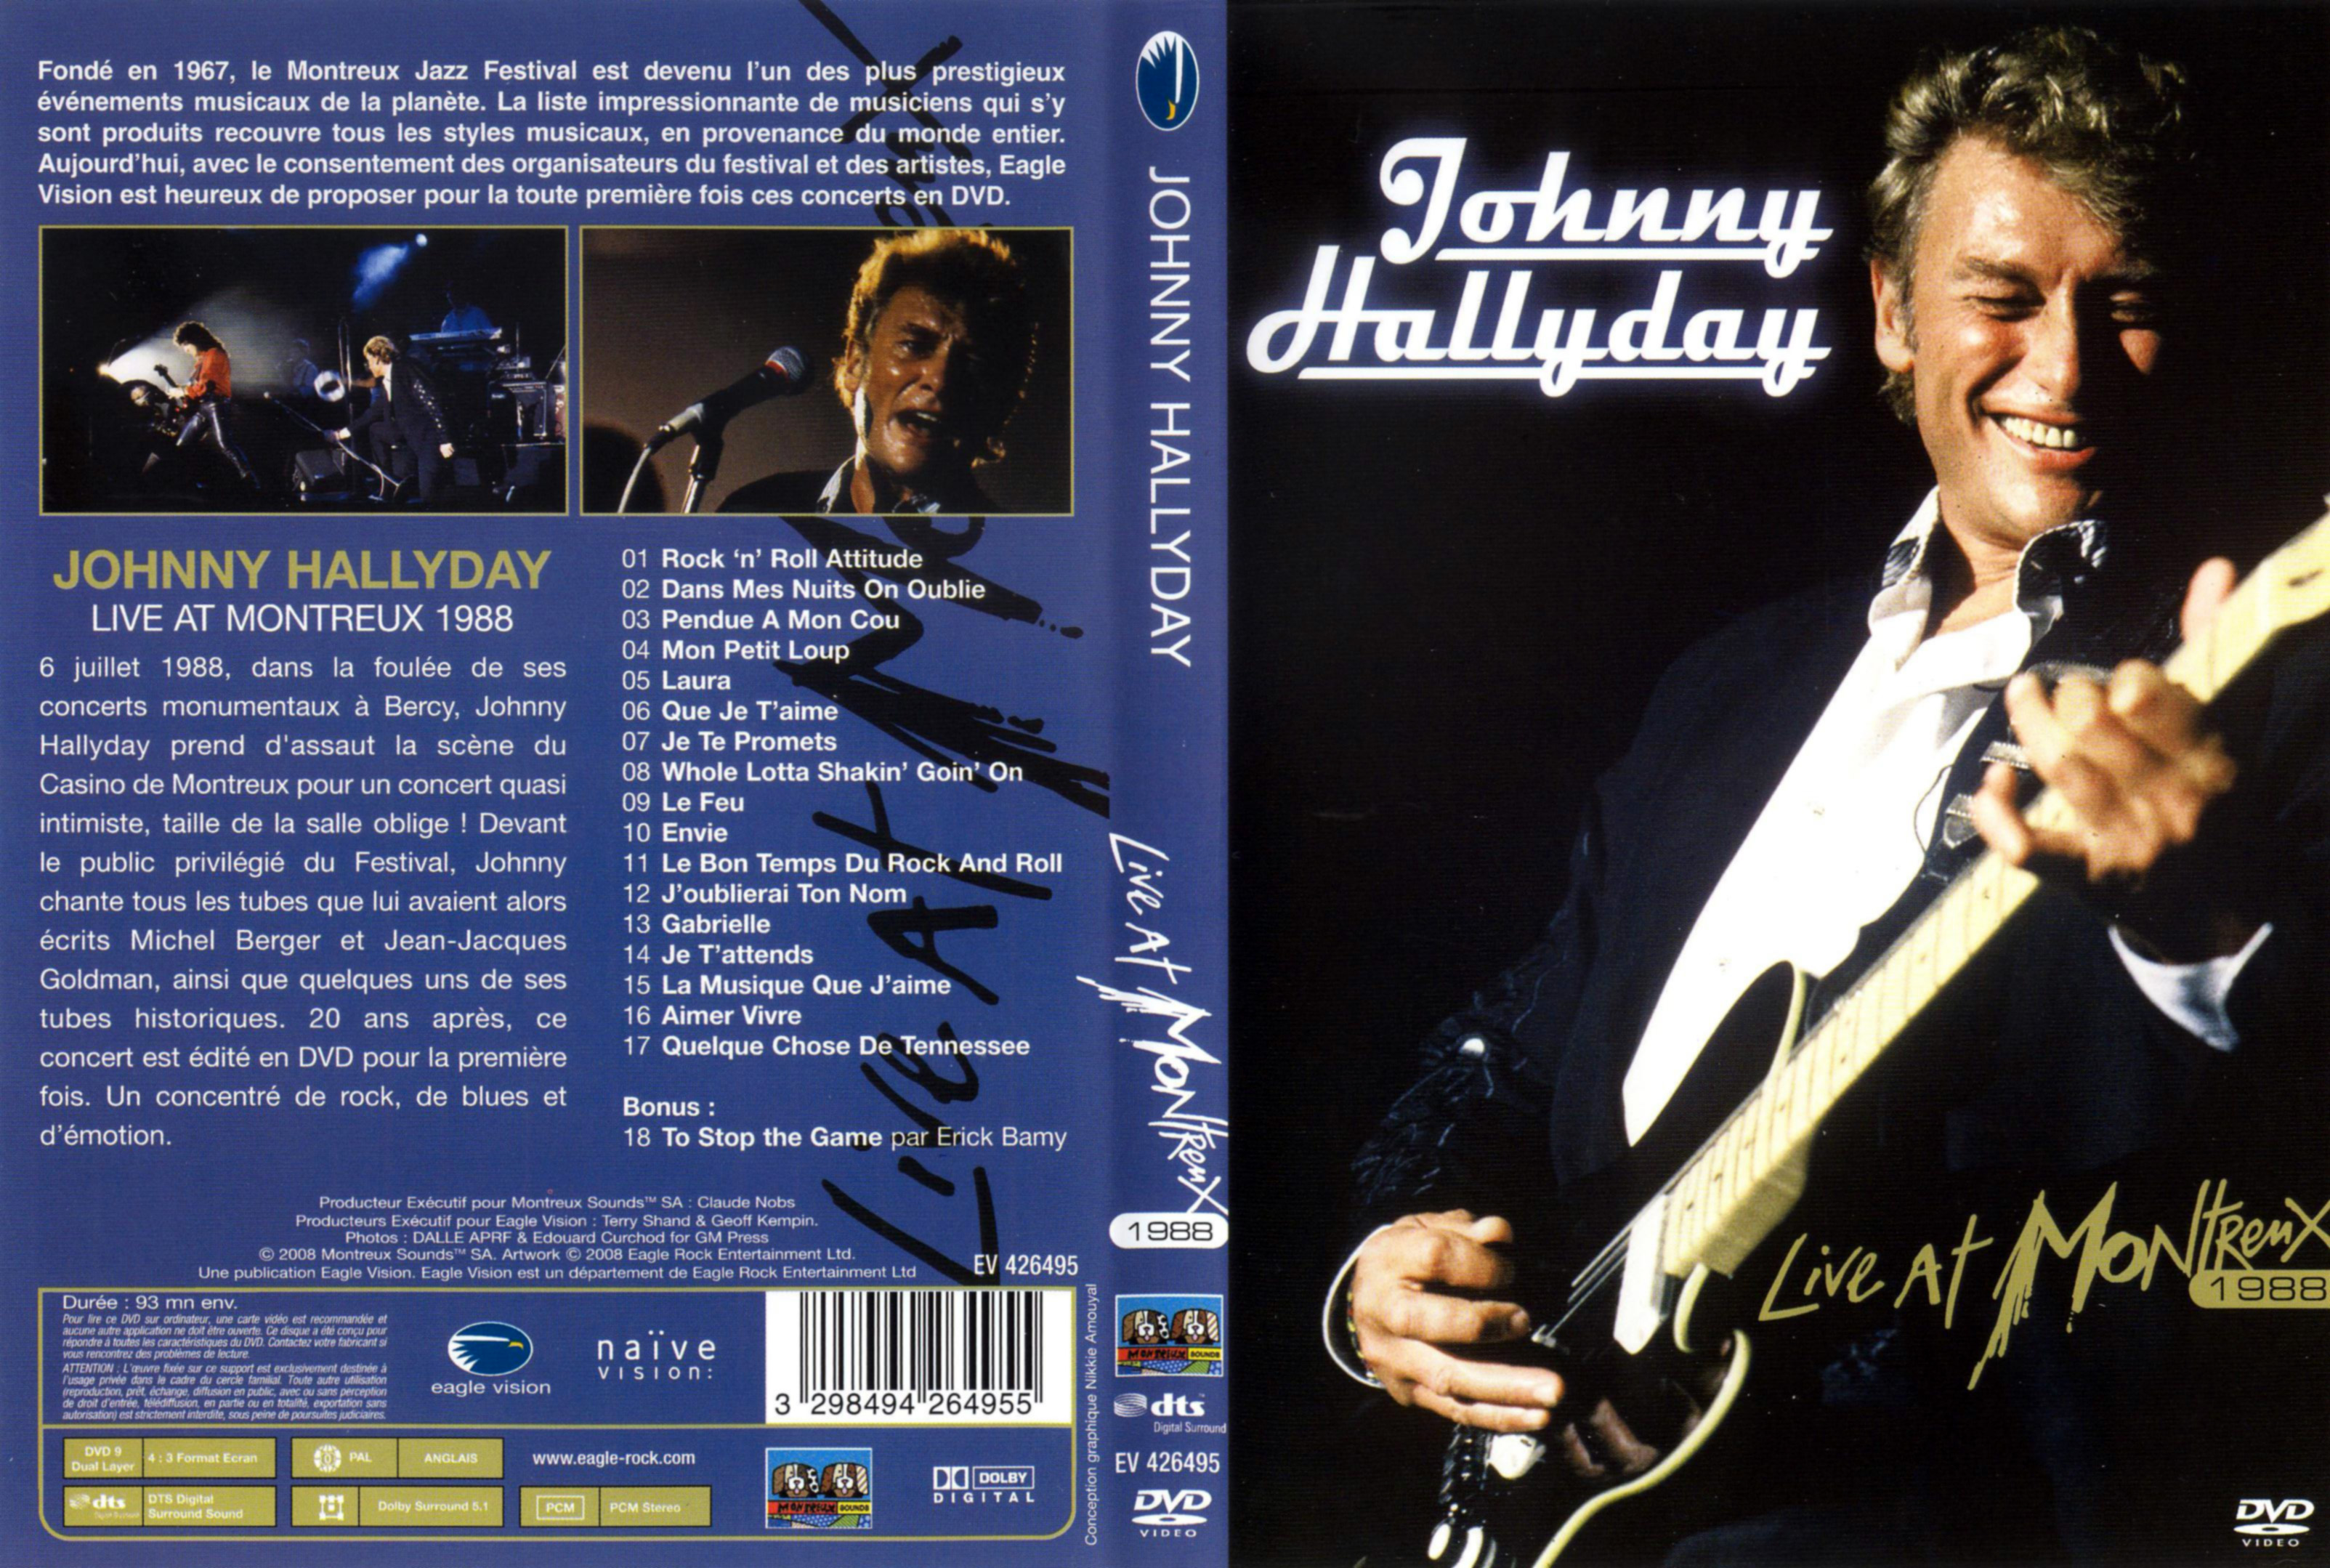 Jaquette DVD Johnny Hallyday Live at Montreux 1986